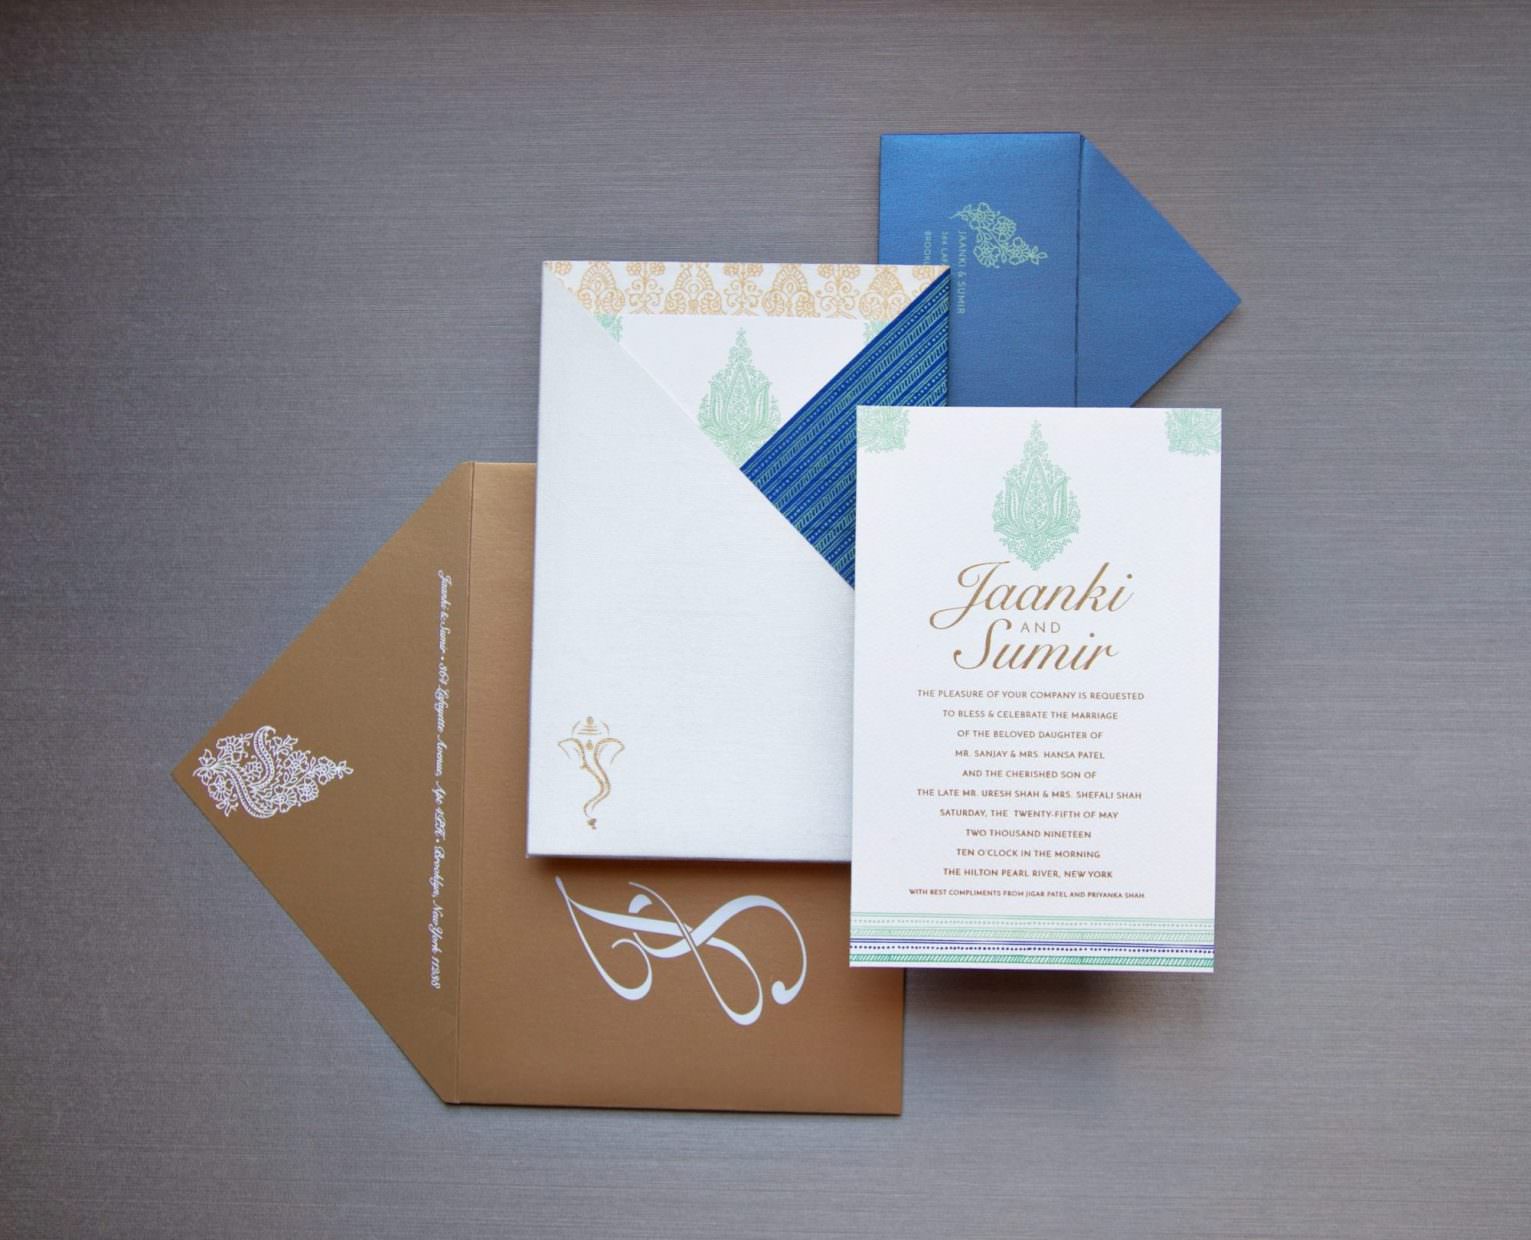 Raw Silk Pocket with custom printed invitation for Indian Wedding